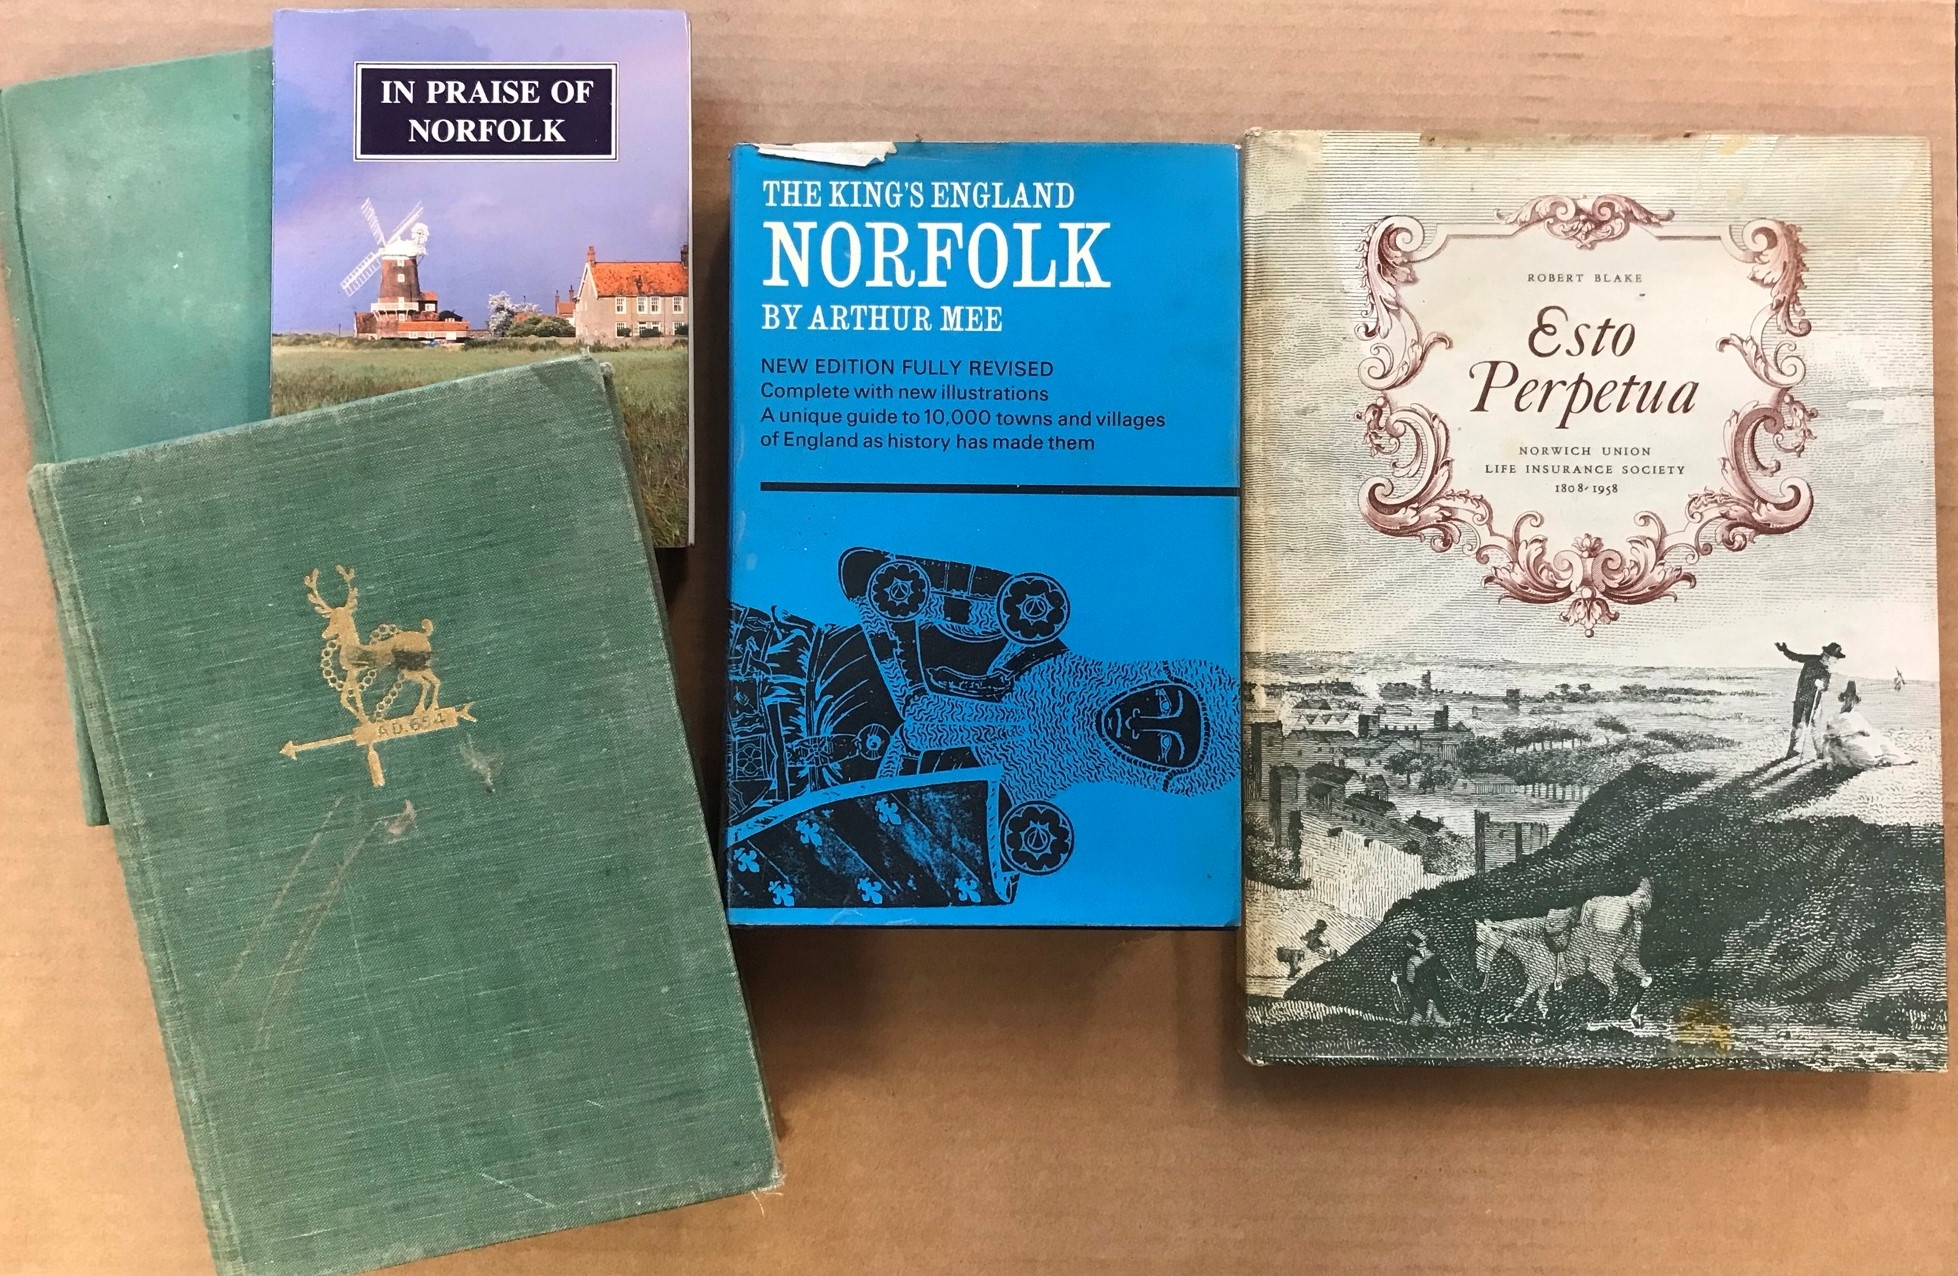 Norfolk Interest Books x 5 The King's England: Norfolk by Arthur Mee 1972, Dereham The Biography